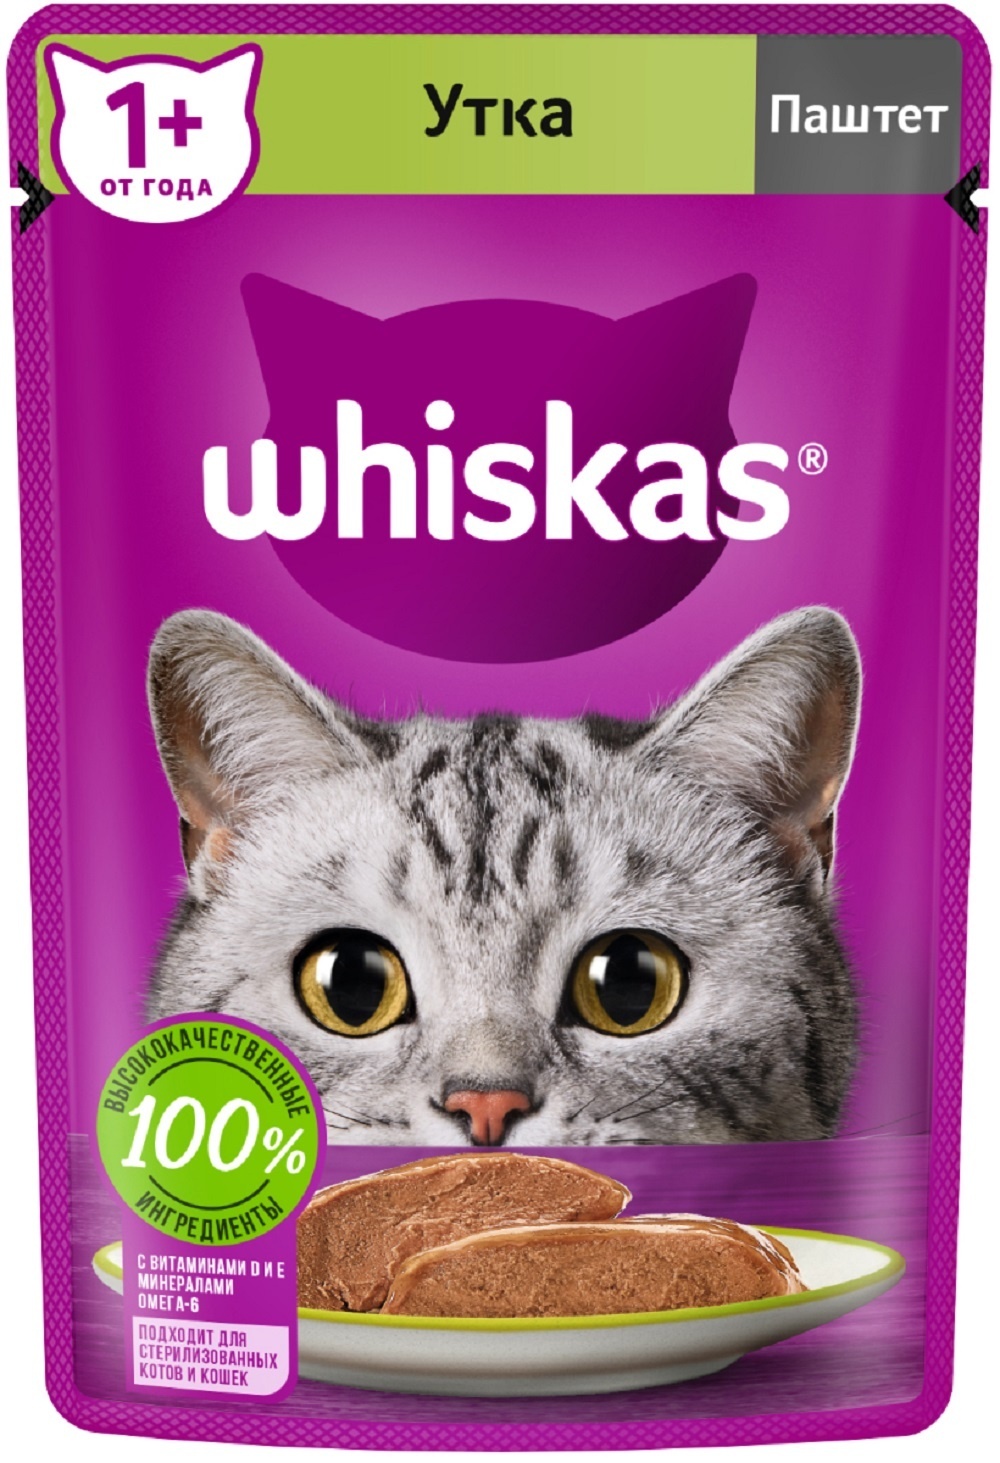 Whiskas Whiskas влажный корм для кошек, паштет с уткой (75 г) корм для кошек whiskas паштет с уткой 75 г